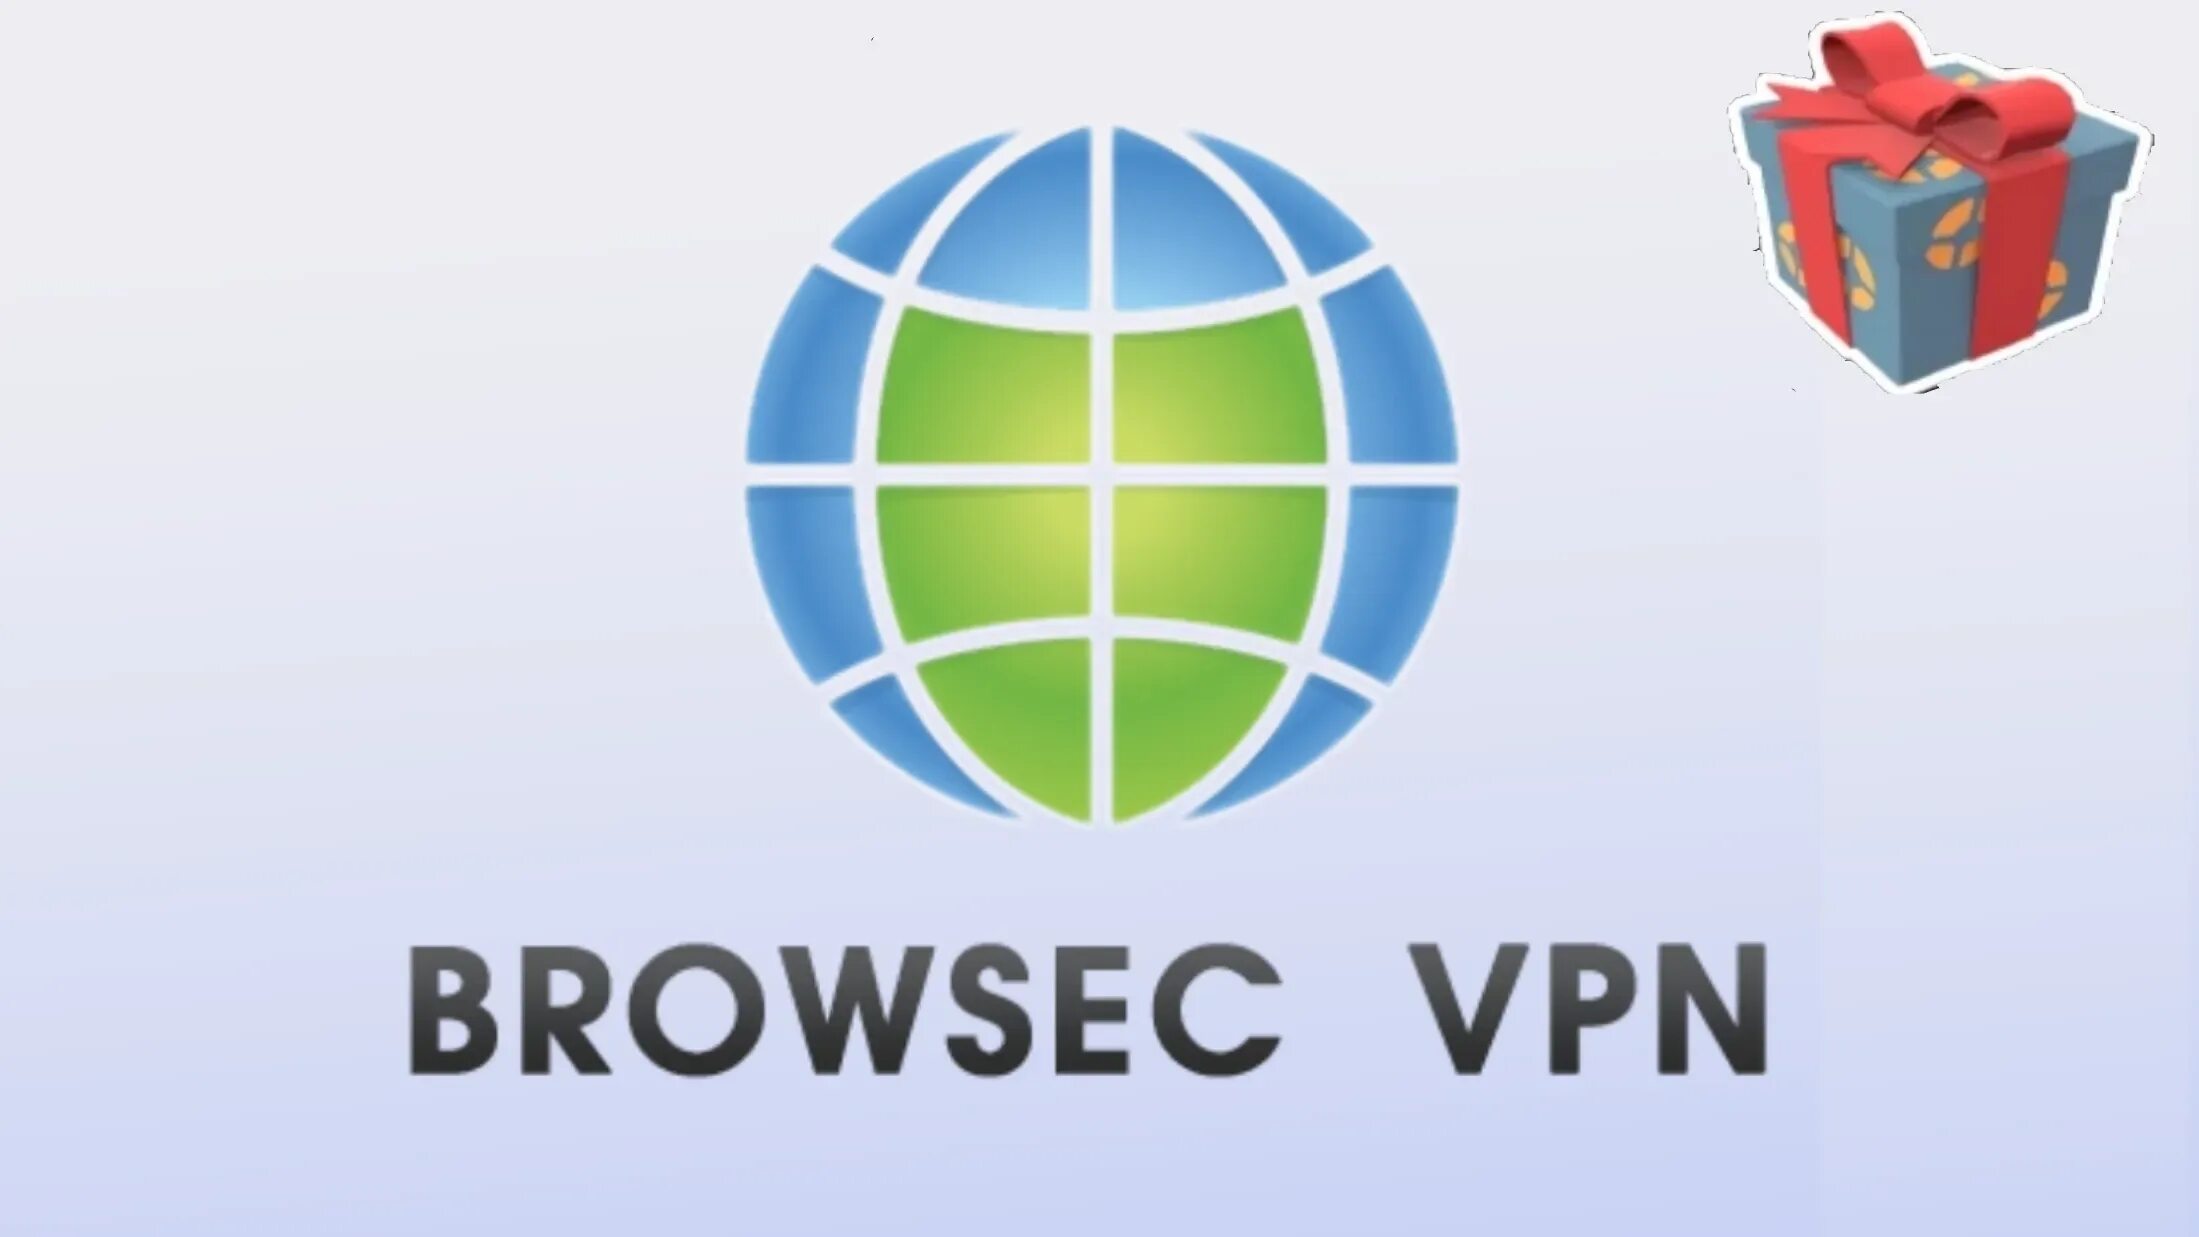 Browsec. Browsec логотип. Впн browsec. VPN browsec лого.